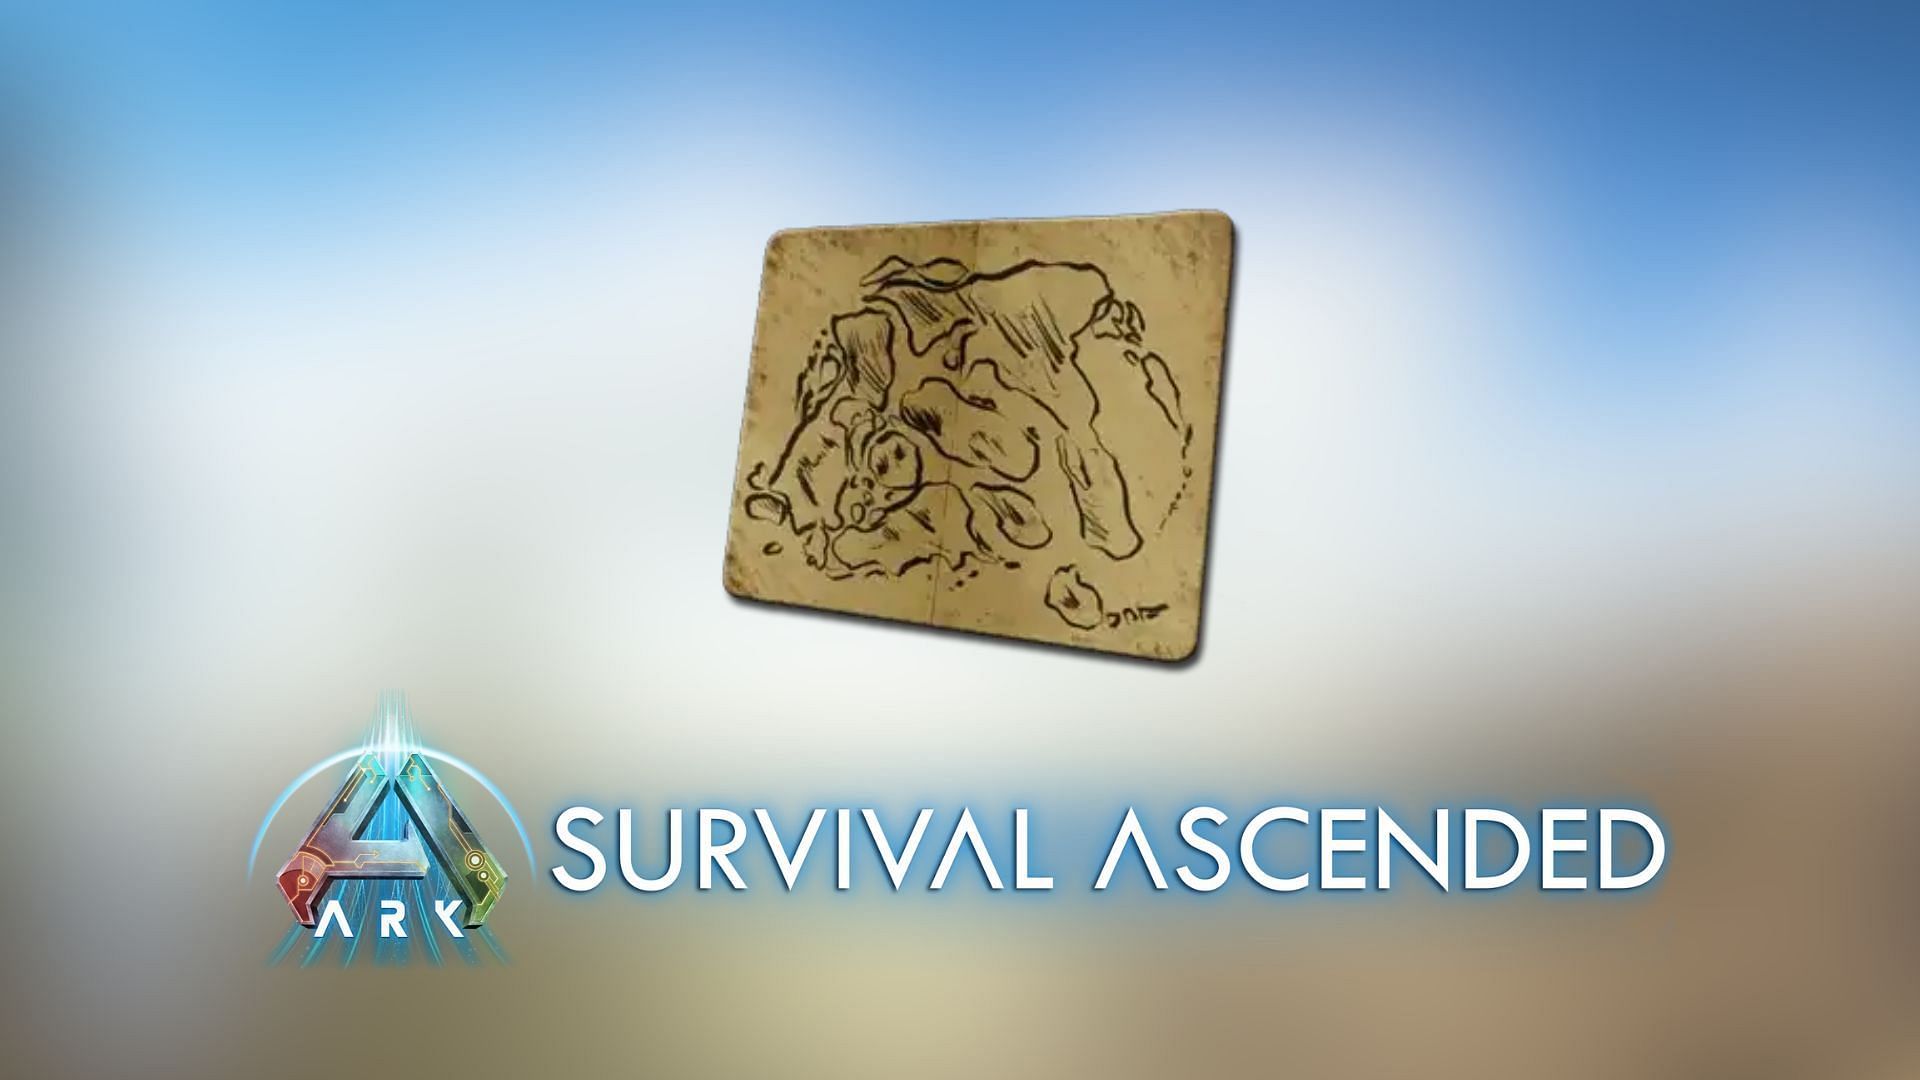 treasure maps in Akr Survival Ascended